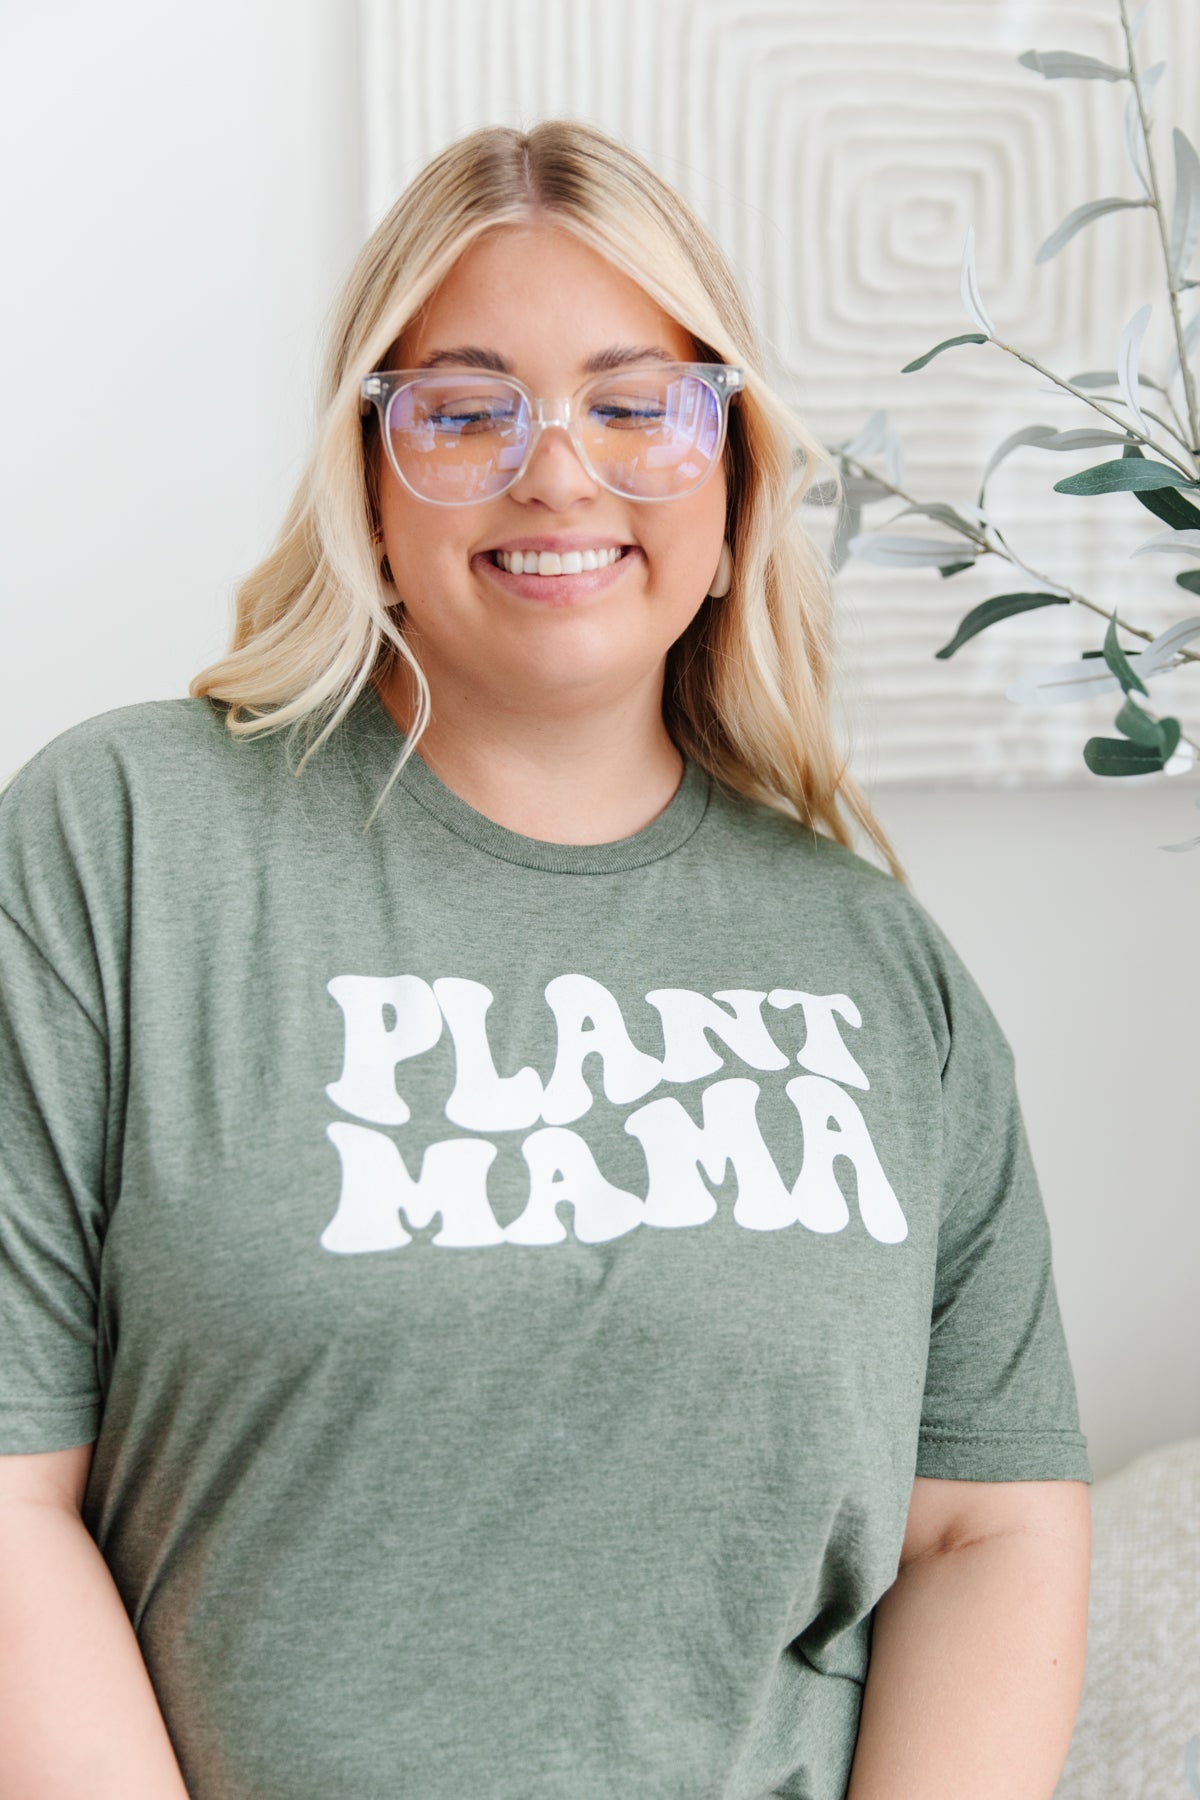 Plant Mama Graphic Tee